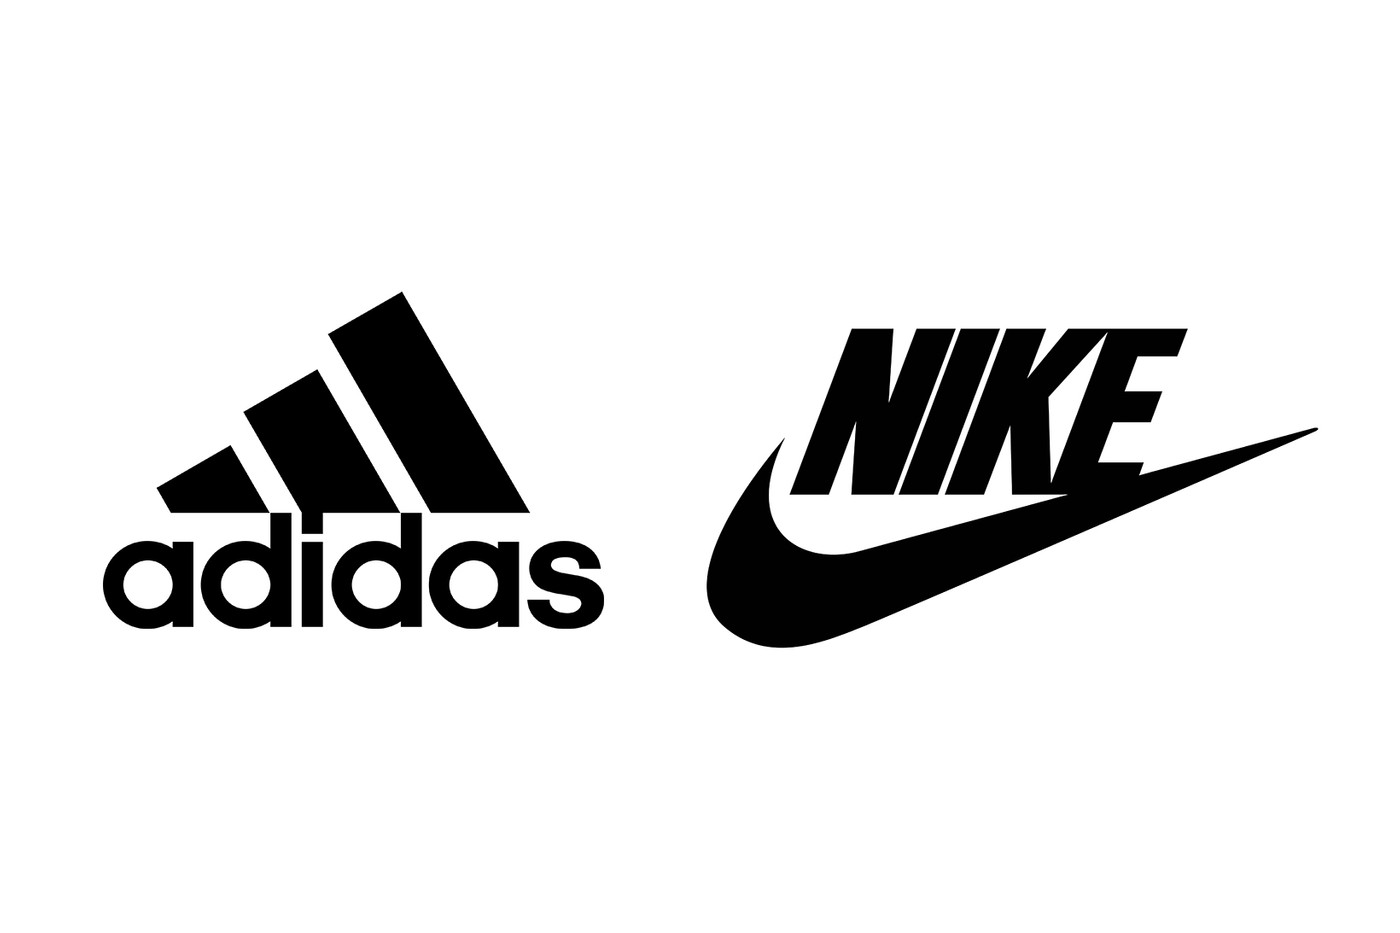 Adidas-Nike